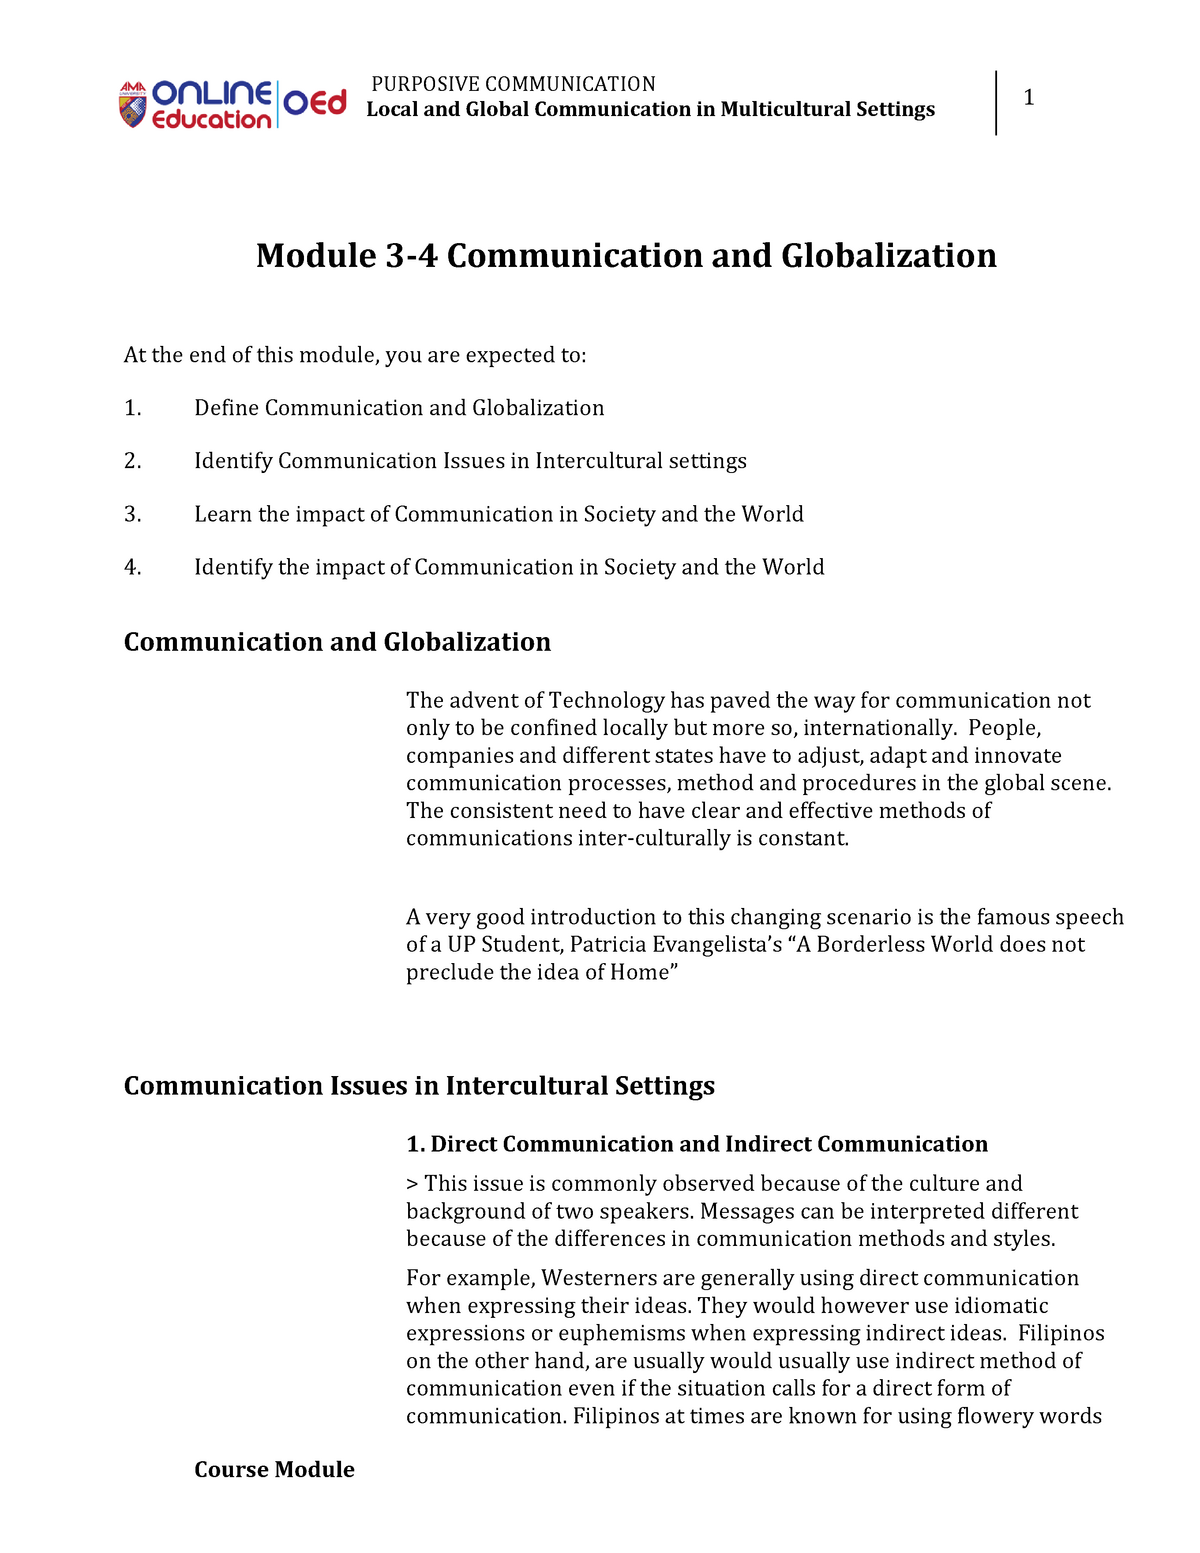 global communication essay